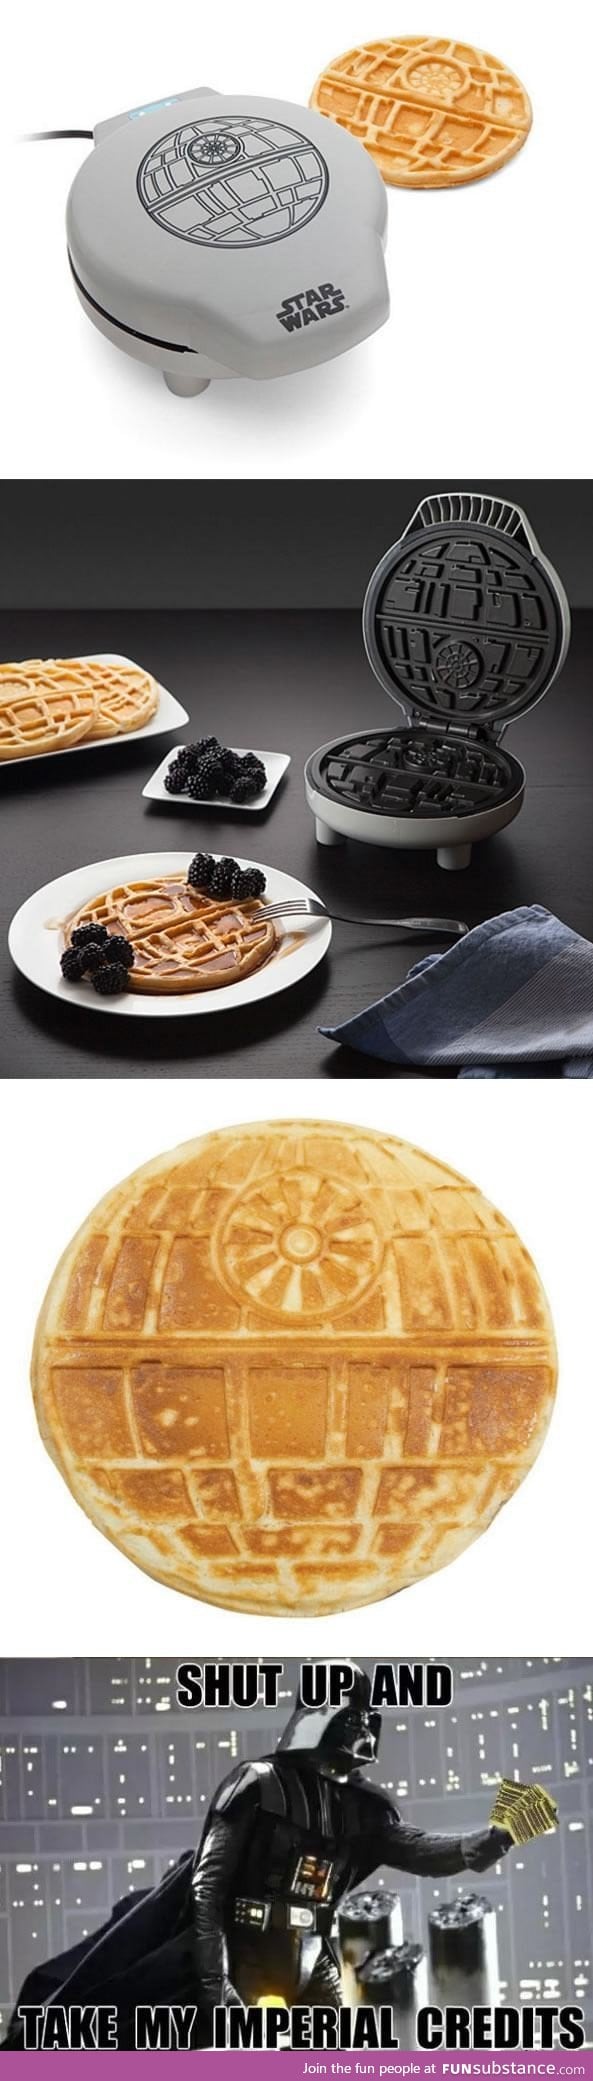 Star wars waffle maker that bakes death stars for breakfast